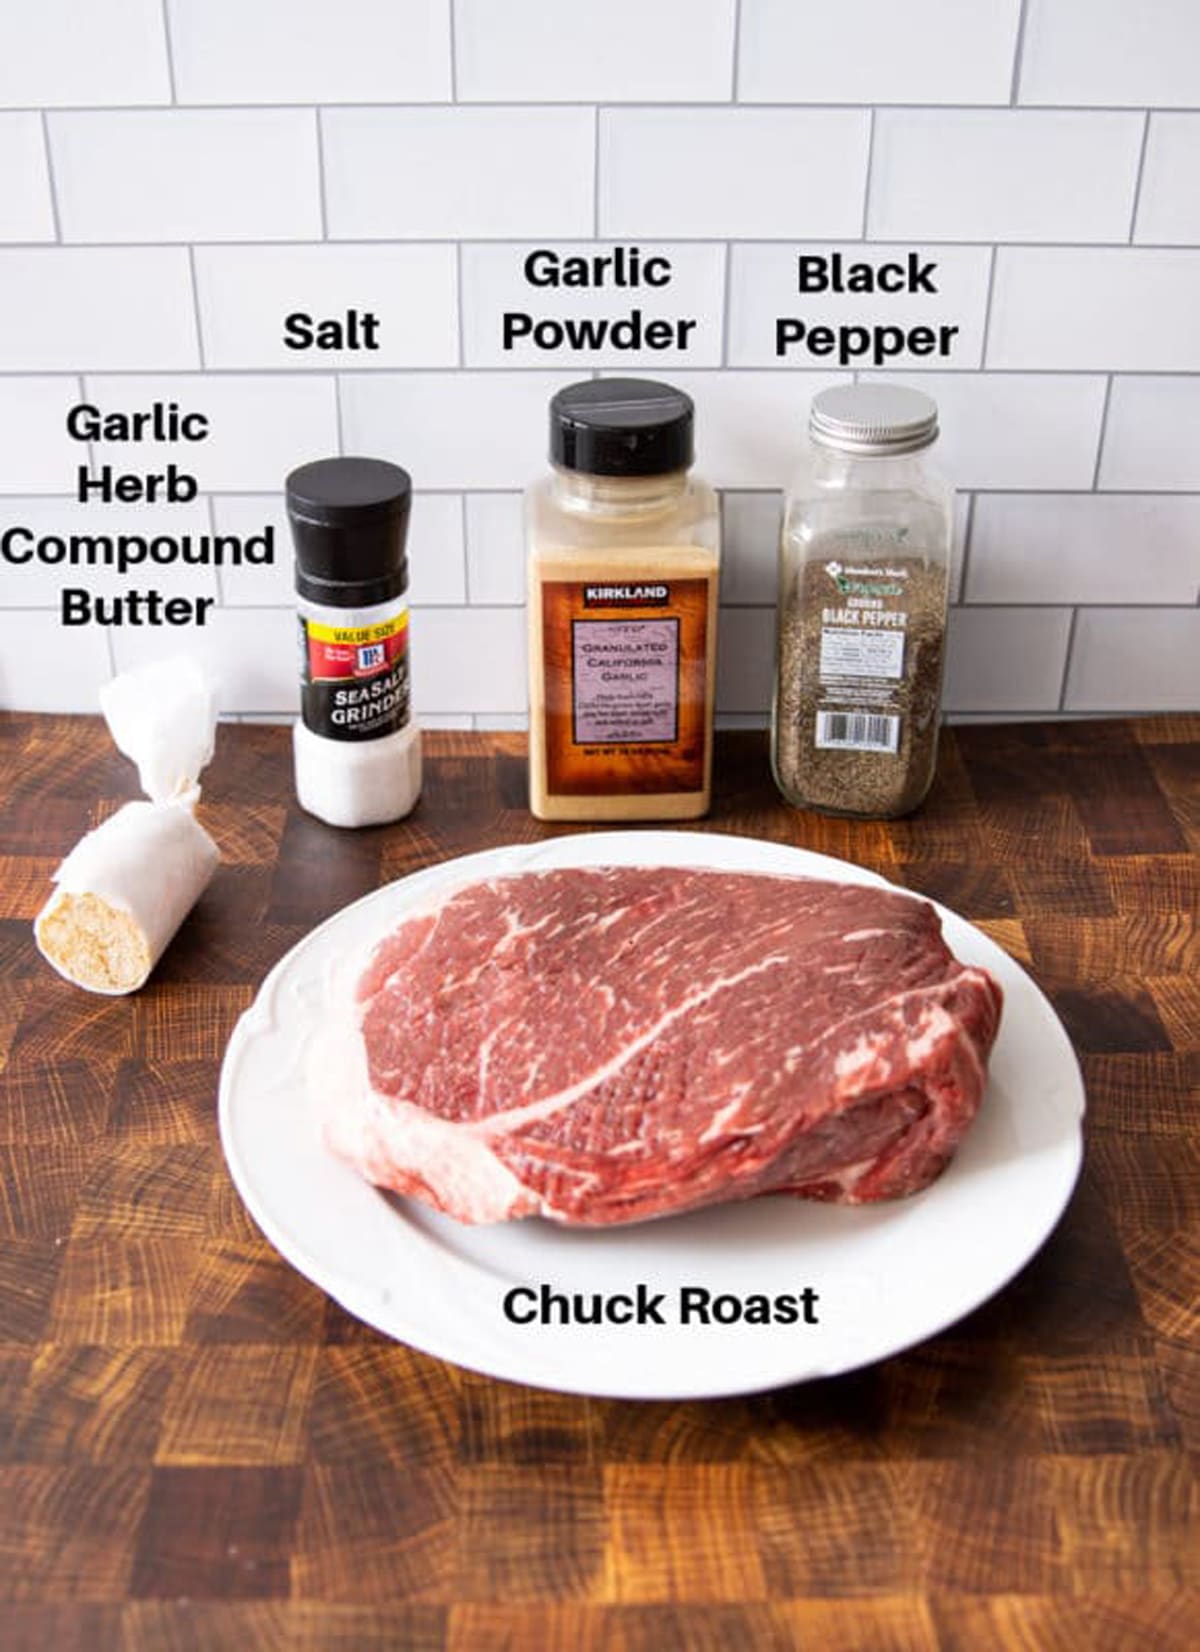 Chuck roast, salt, pepper, garlic powder, and compound butter sitting on a counter. 